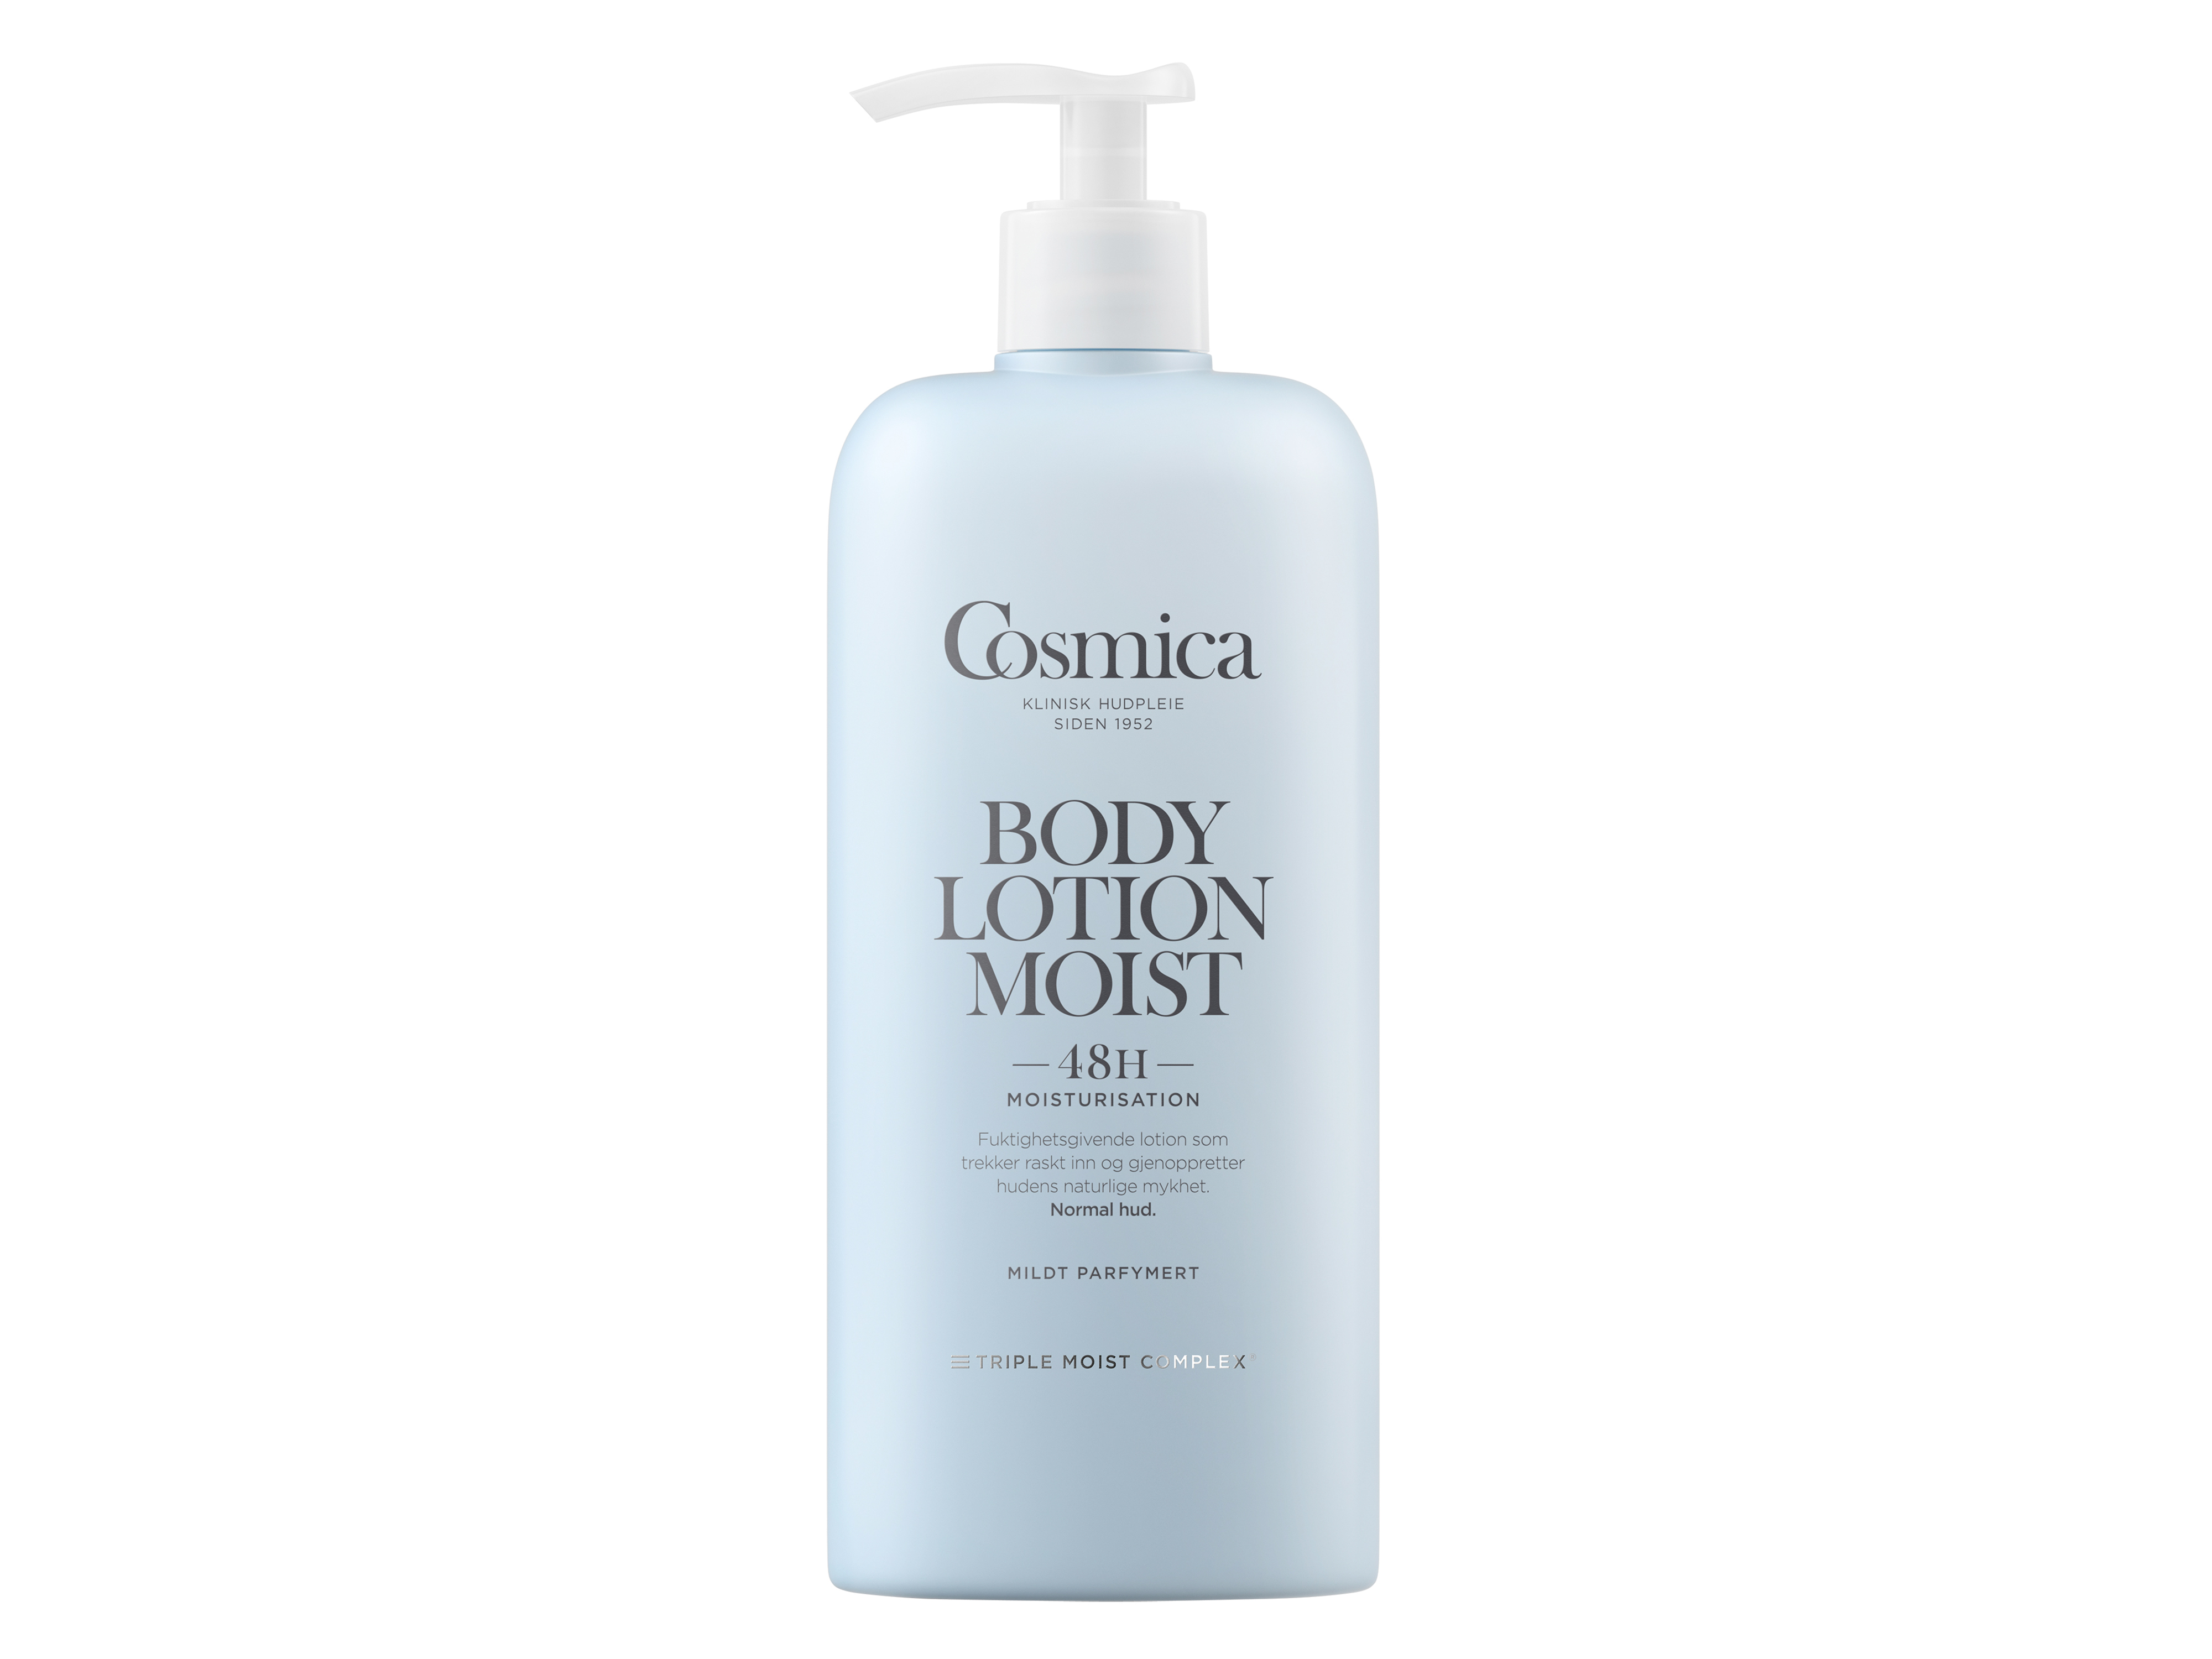 Cosmica Body Lotion Moist m/p, 400 ml